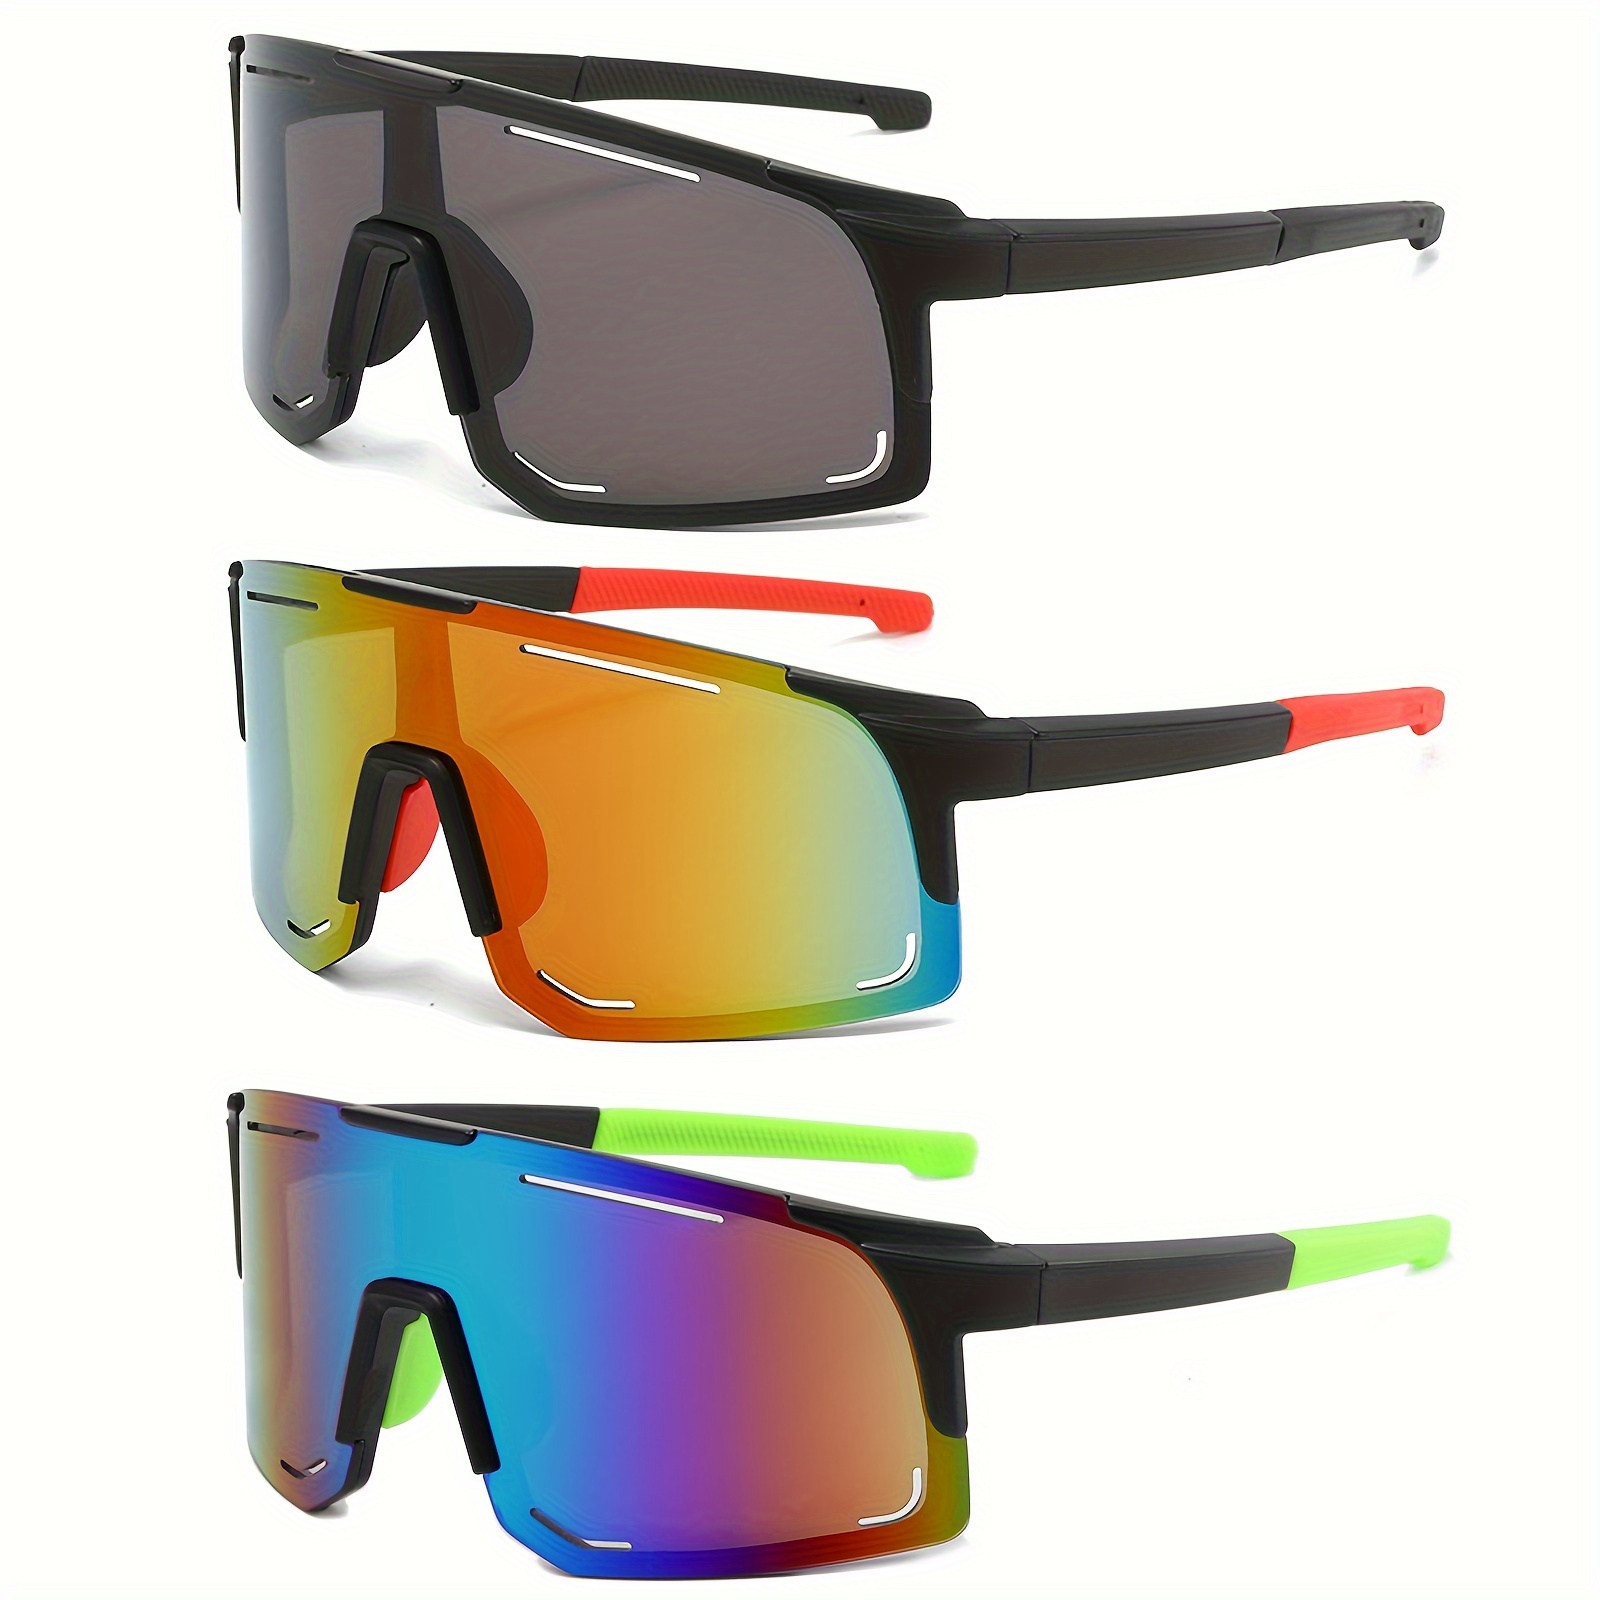 

3pcs Sports Sunglasses For Men Women Youth Baseball Cycling Running Softball Biking Glasses